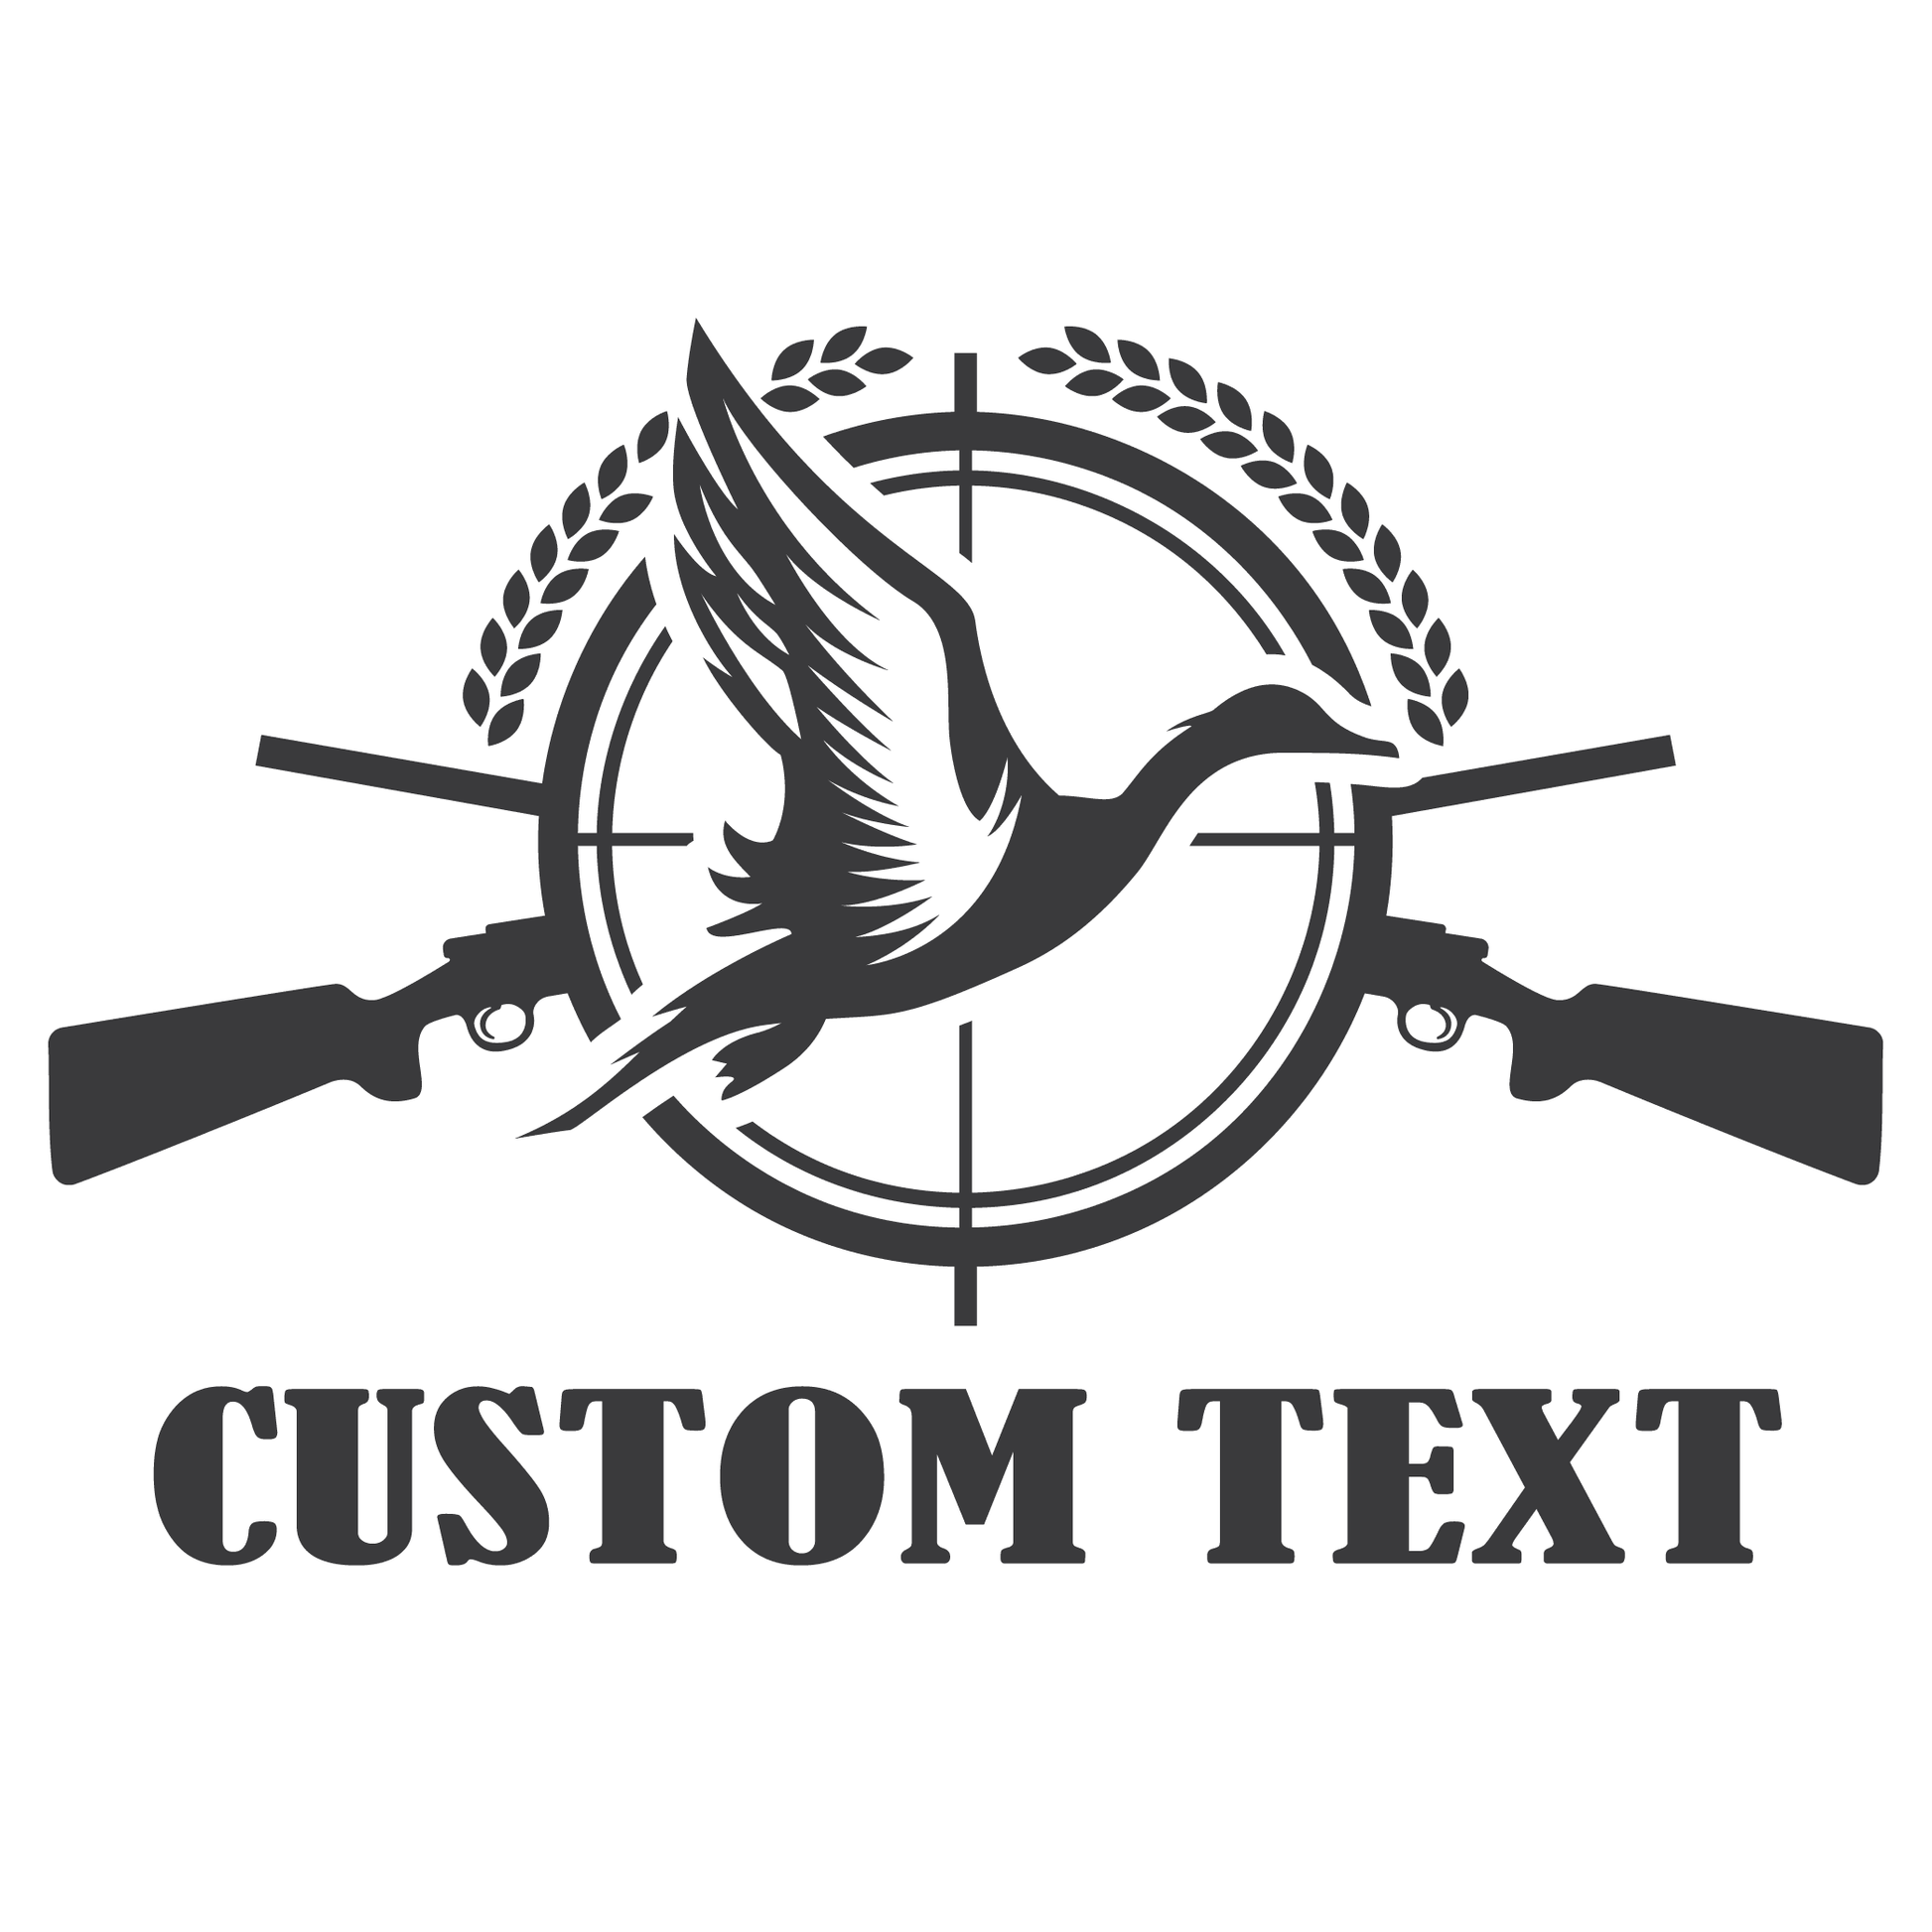 ShopVinylDesignStore.com Duck with Guns Add Your Custom Text, Hunting custom text 1 line Shop Vinyl Design decals stickers